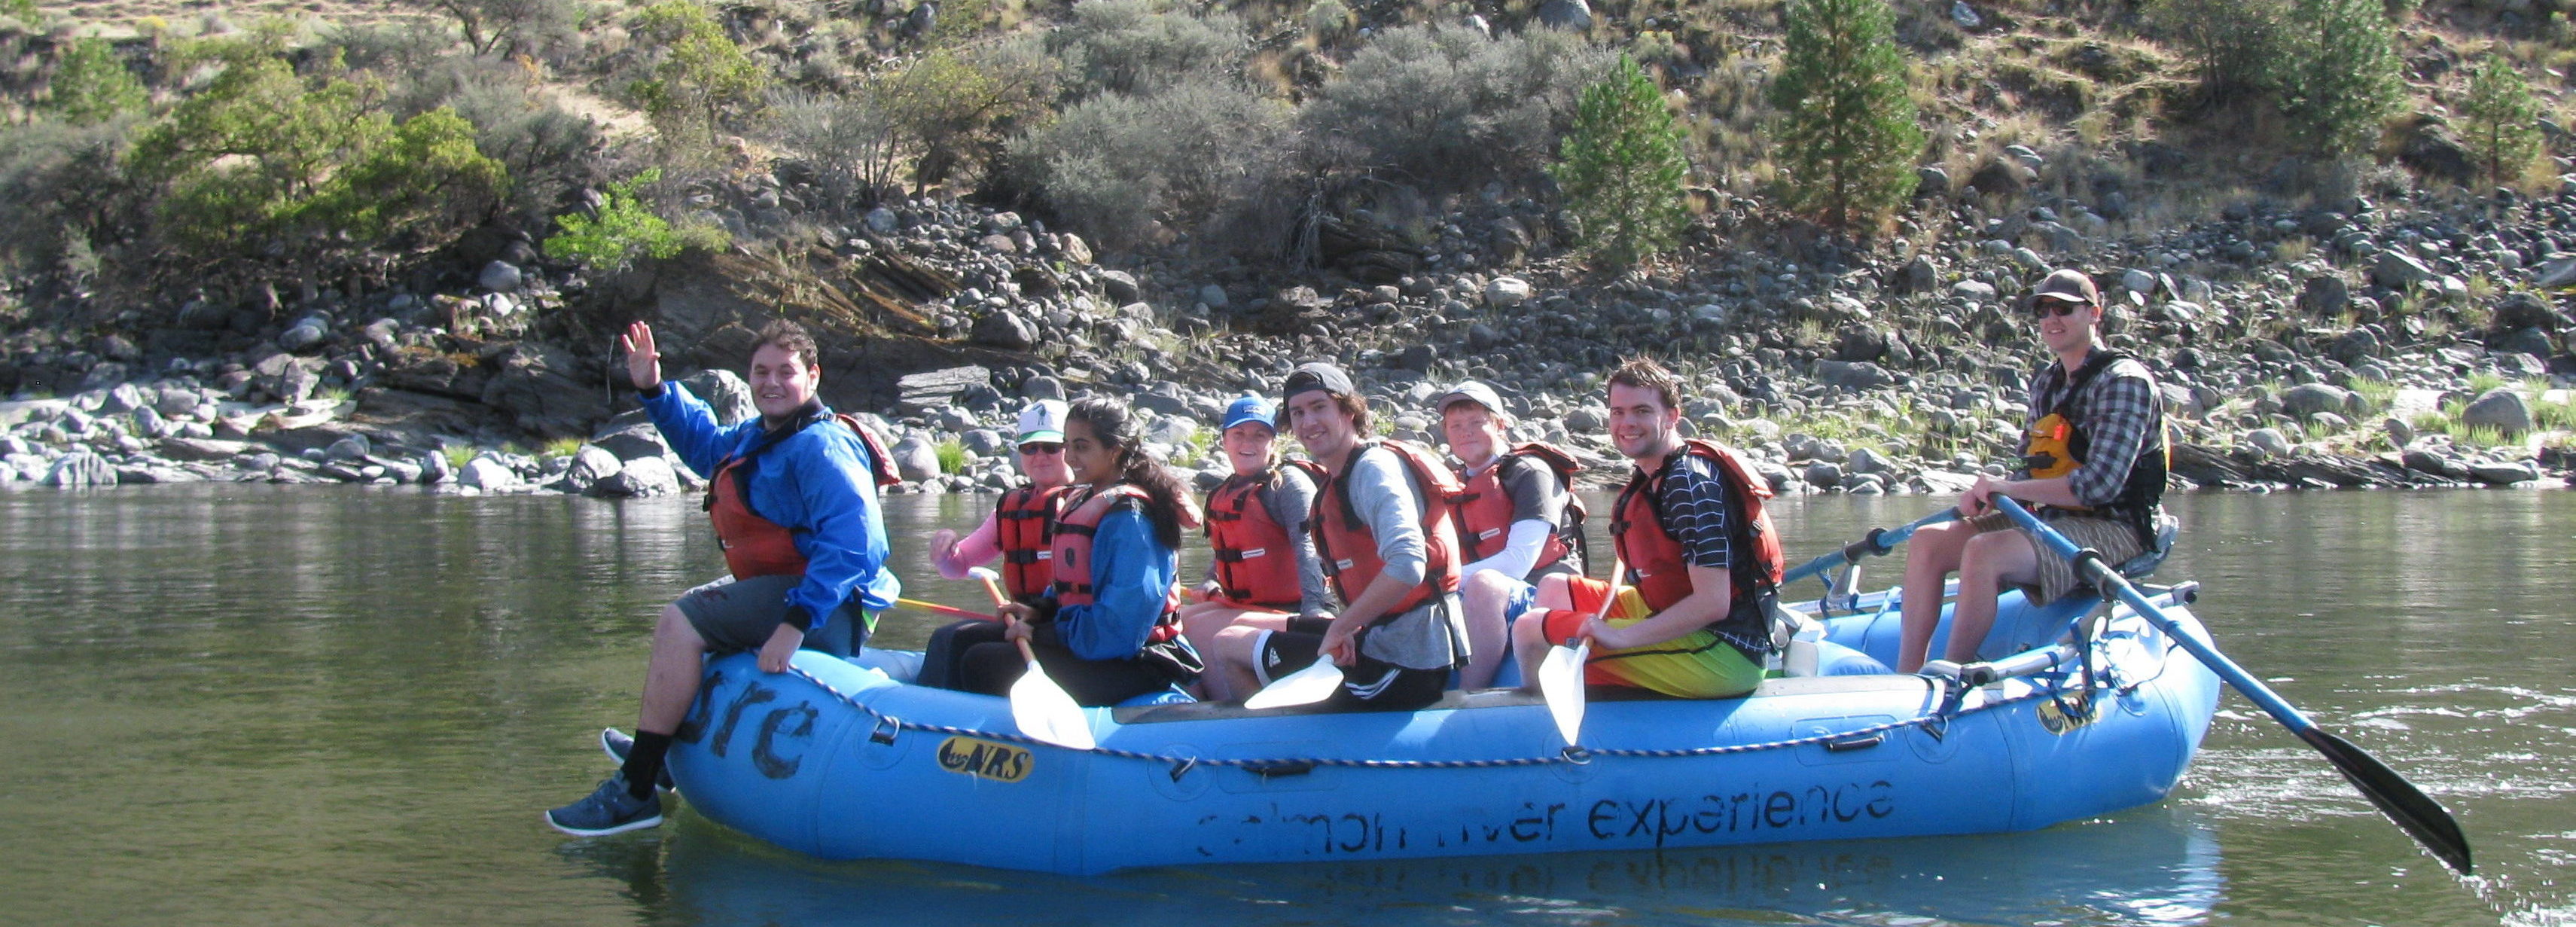 students on raft trip